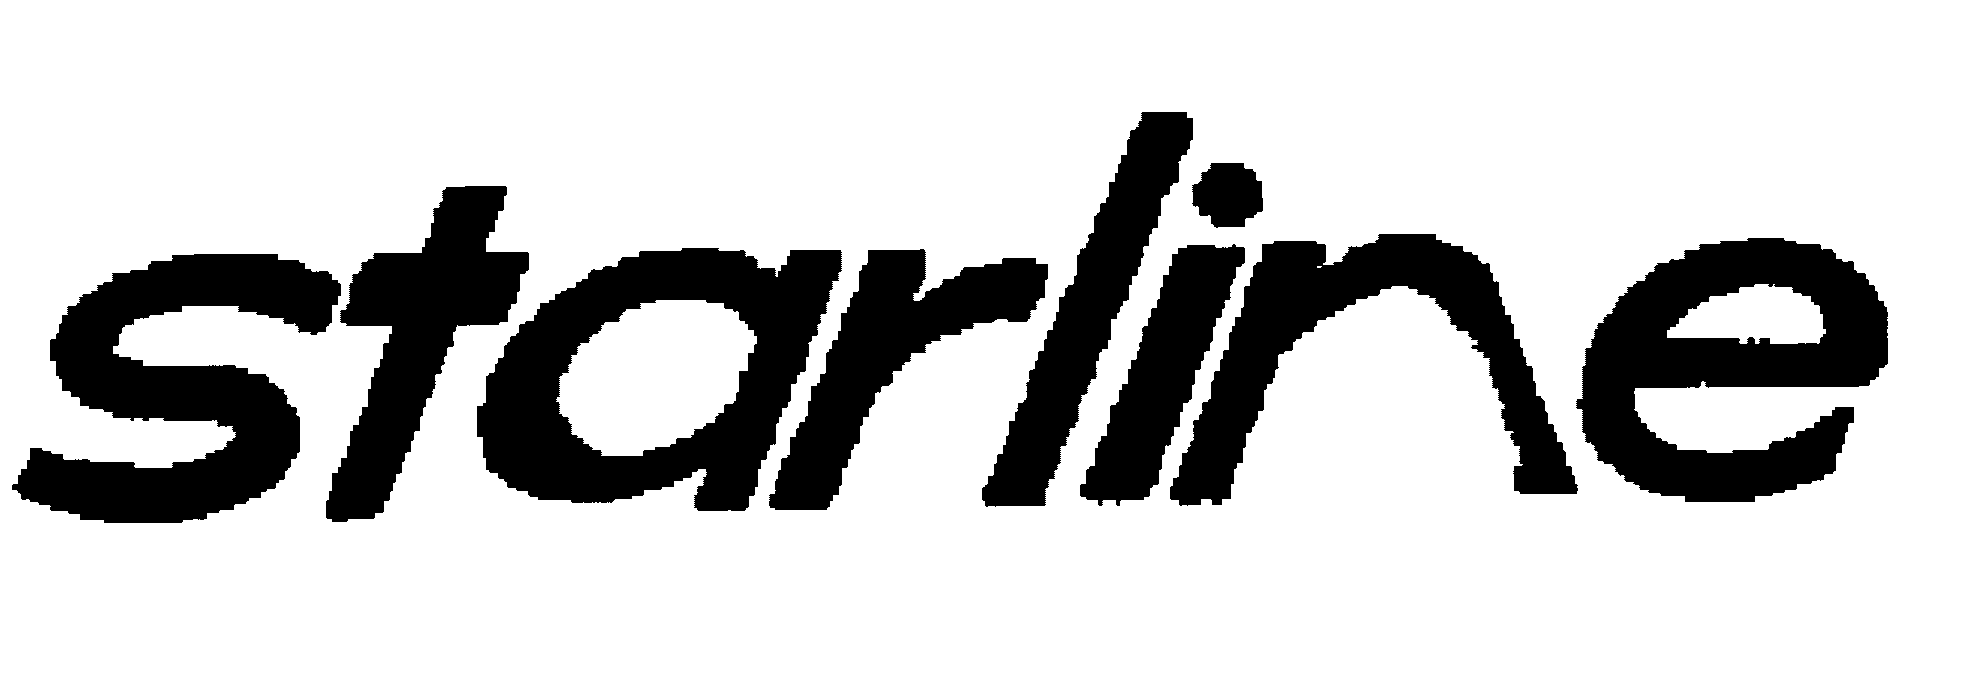 Trademark Logo STARLINE